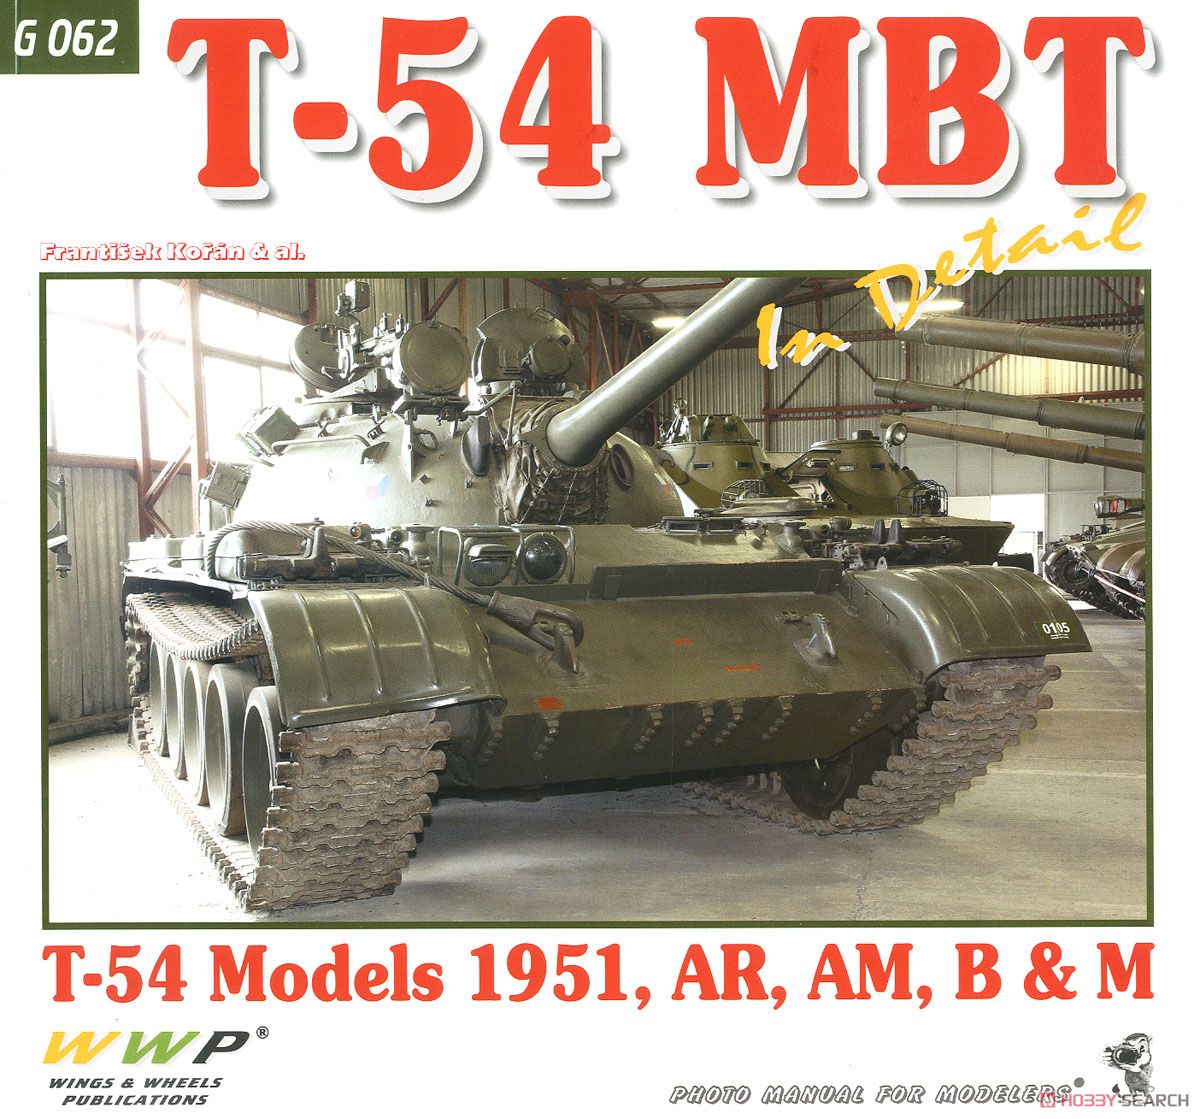 T-54 主力戦車 イン・ディテール (書籍) 商品画像1